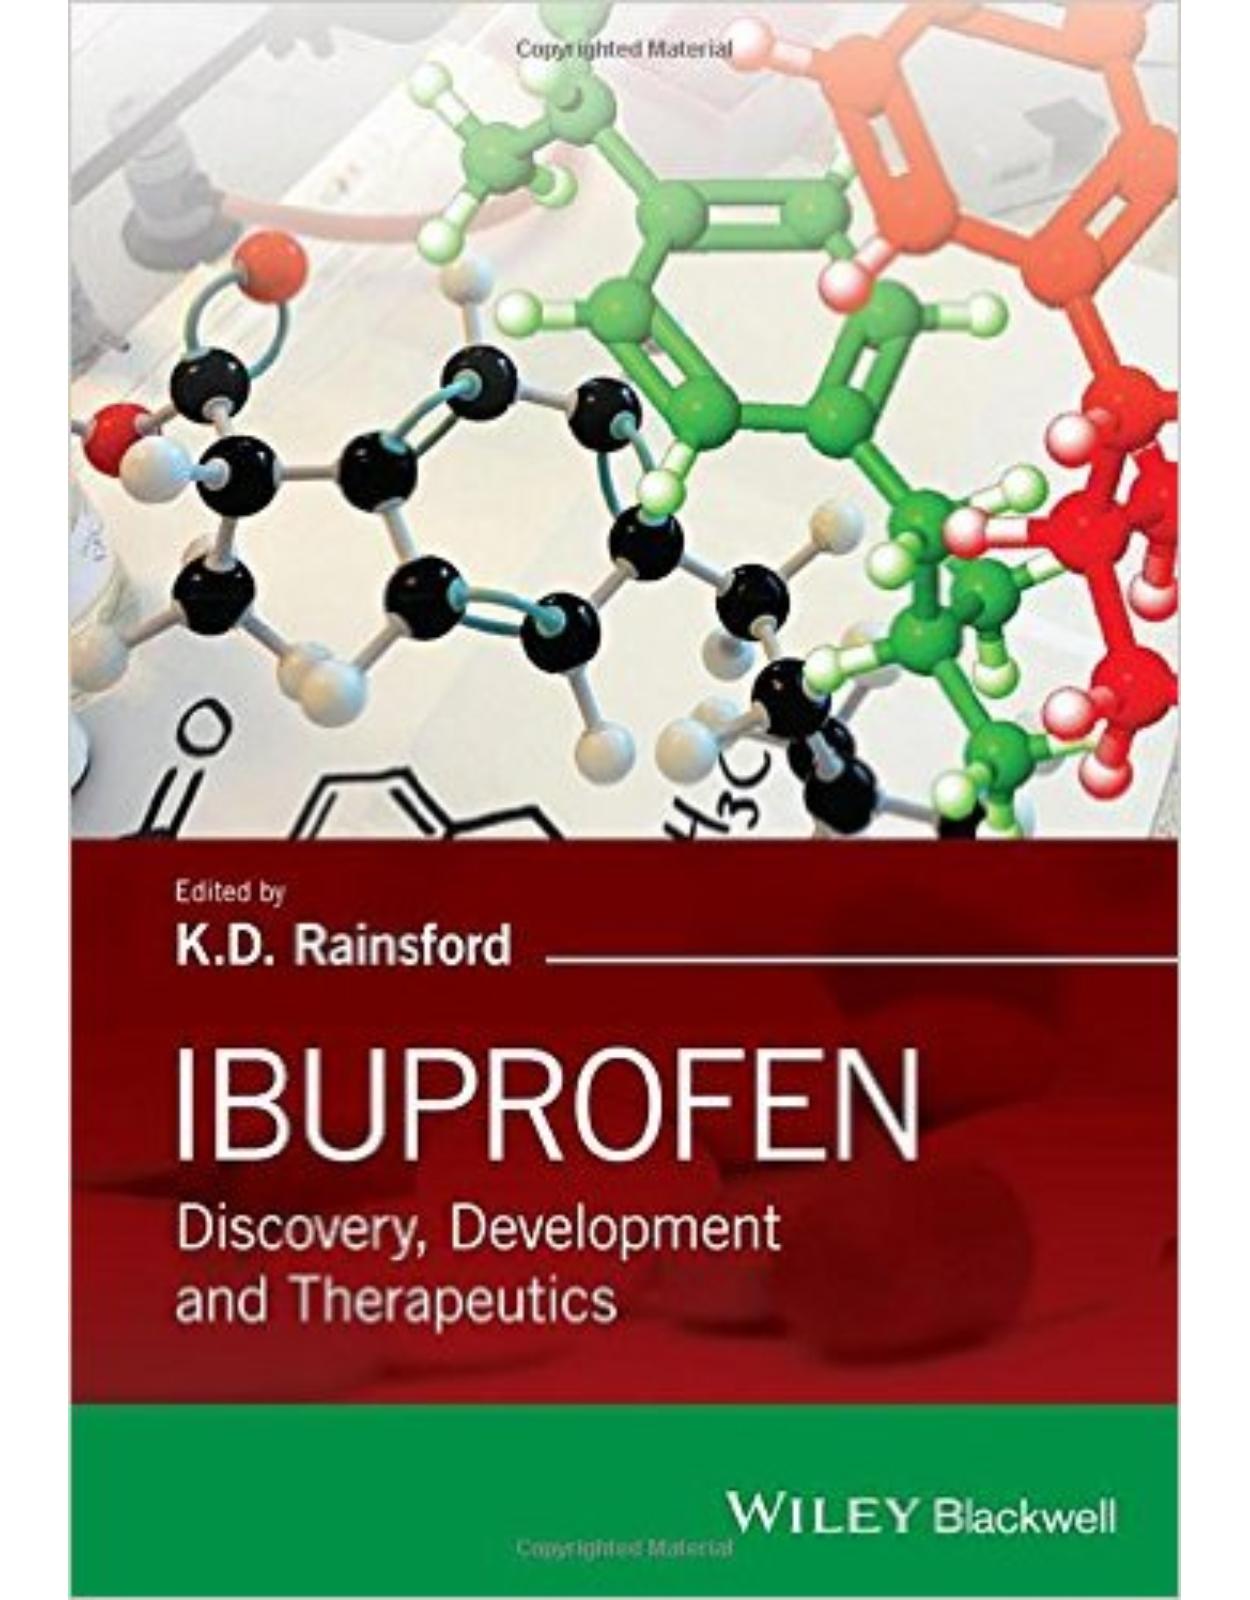 Ibuprofen: Discovery, Development and Therapeutics 1st Edition